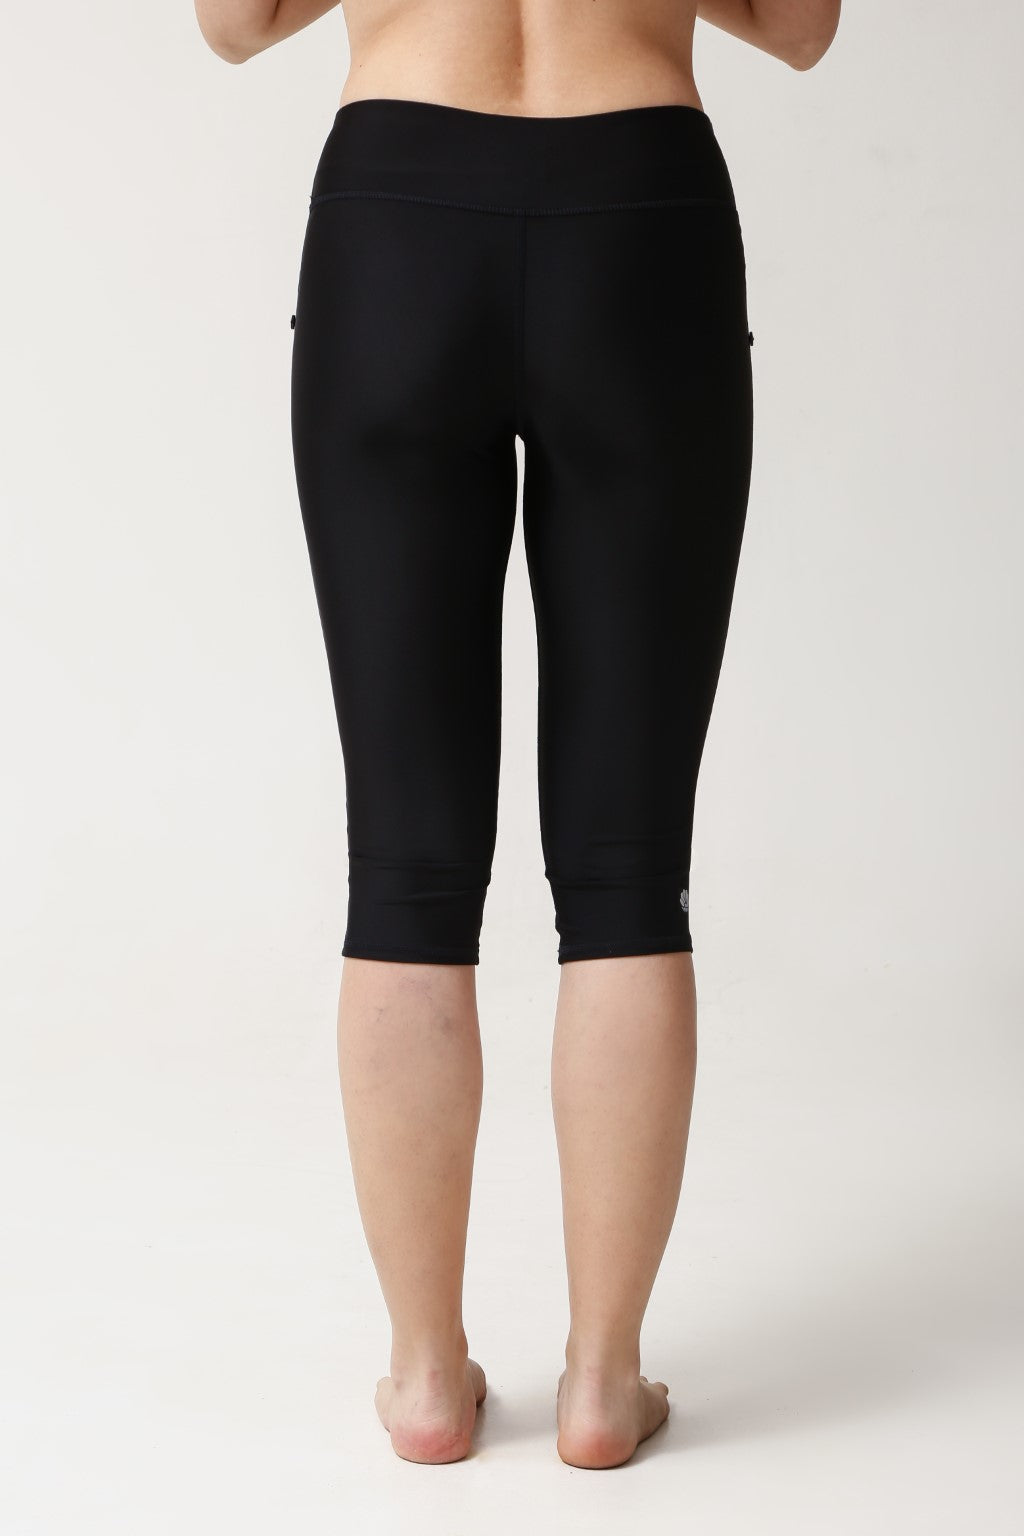 Lanuuk Capri Swim Tights - Black | Cropped Shorts Swimming Leggings Modest Swimwear Burkini